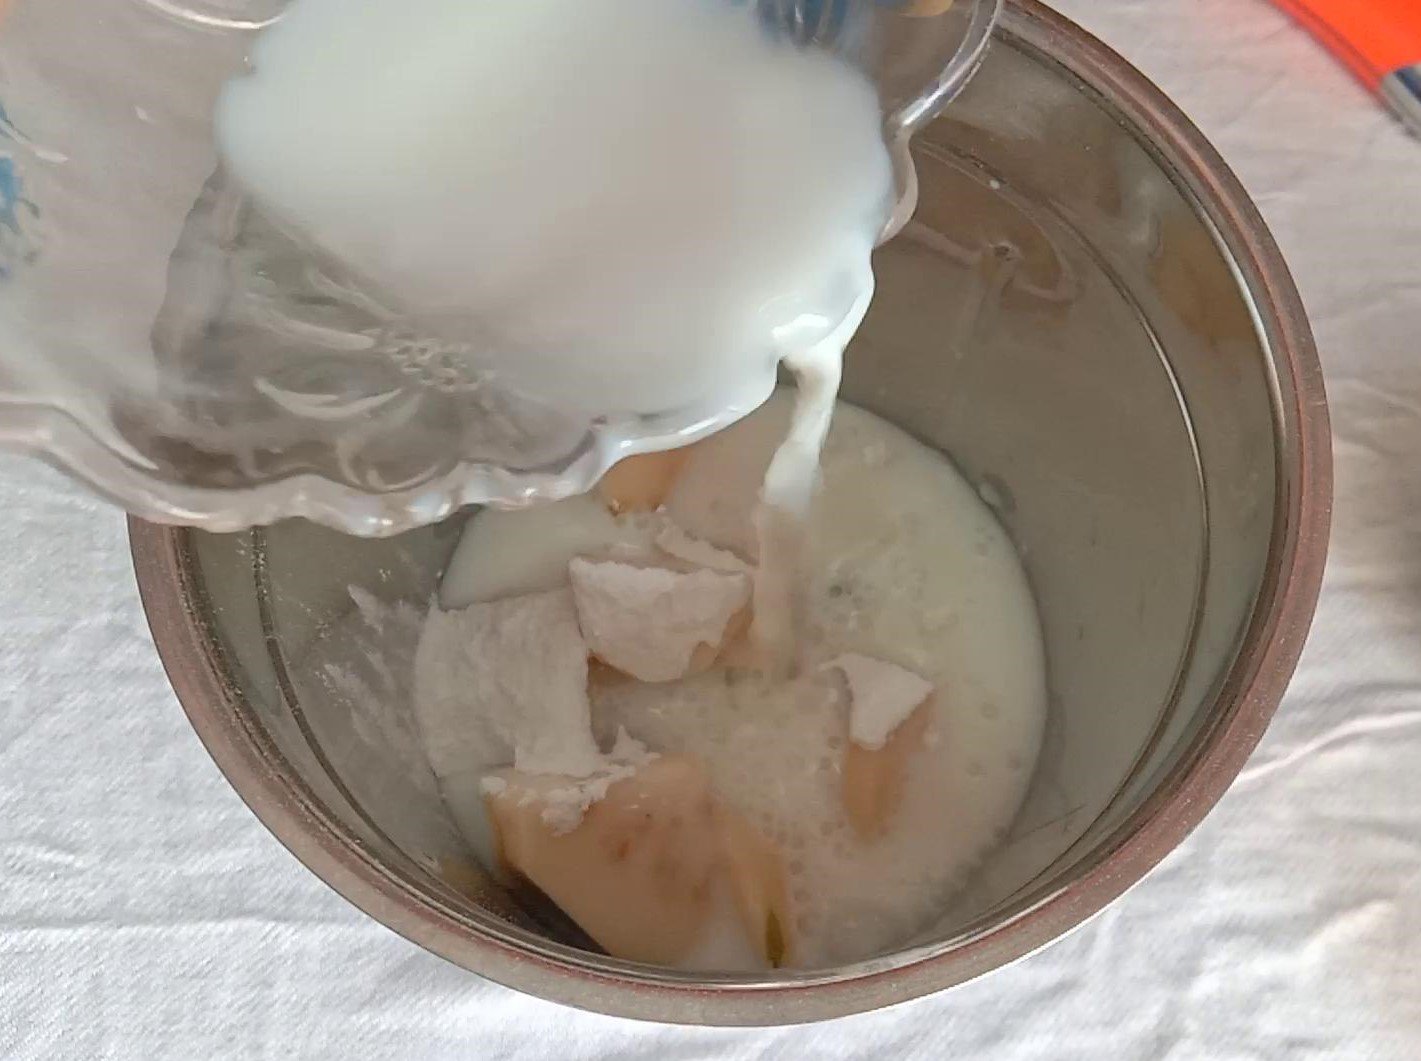 Adding guava pieces, powdered sugar and milk to mAdding guava pieces, powdered sugar and milk to mixer jar, Guava Smoothie.